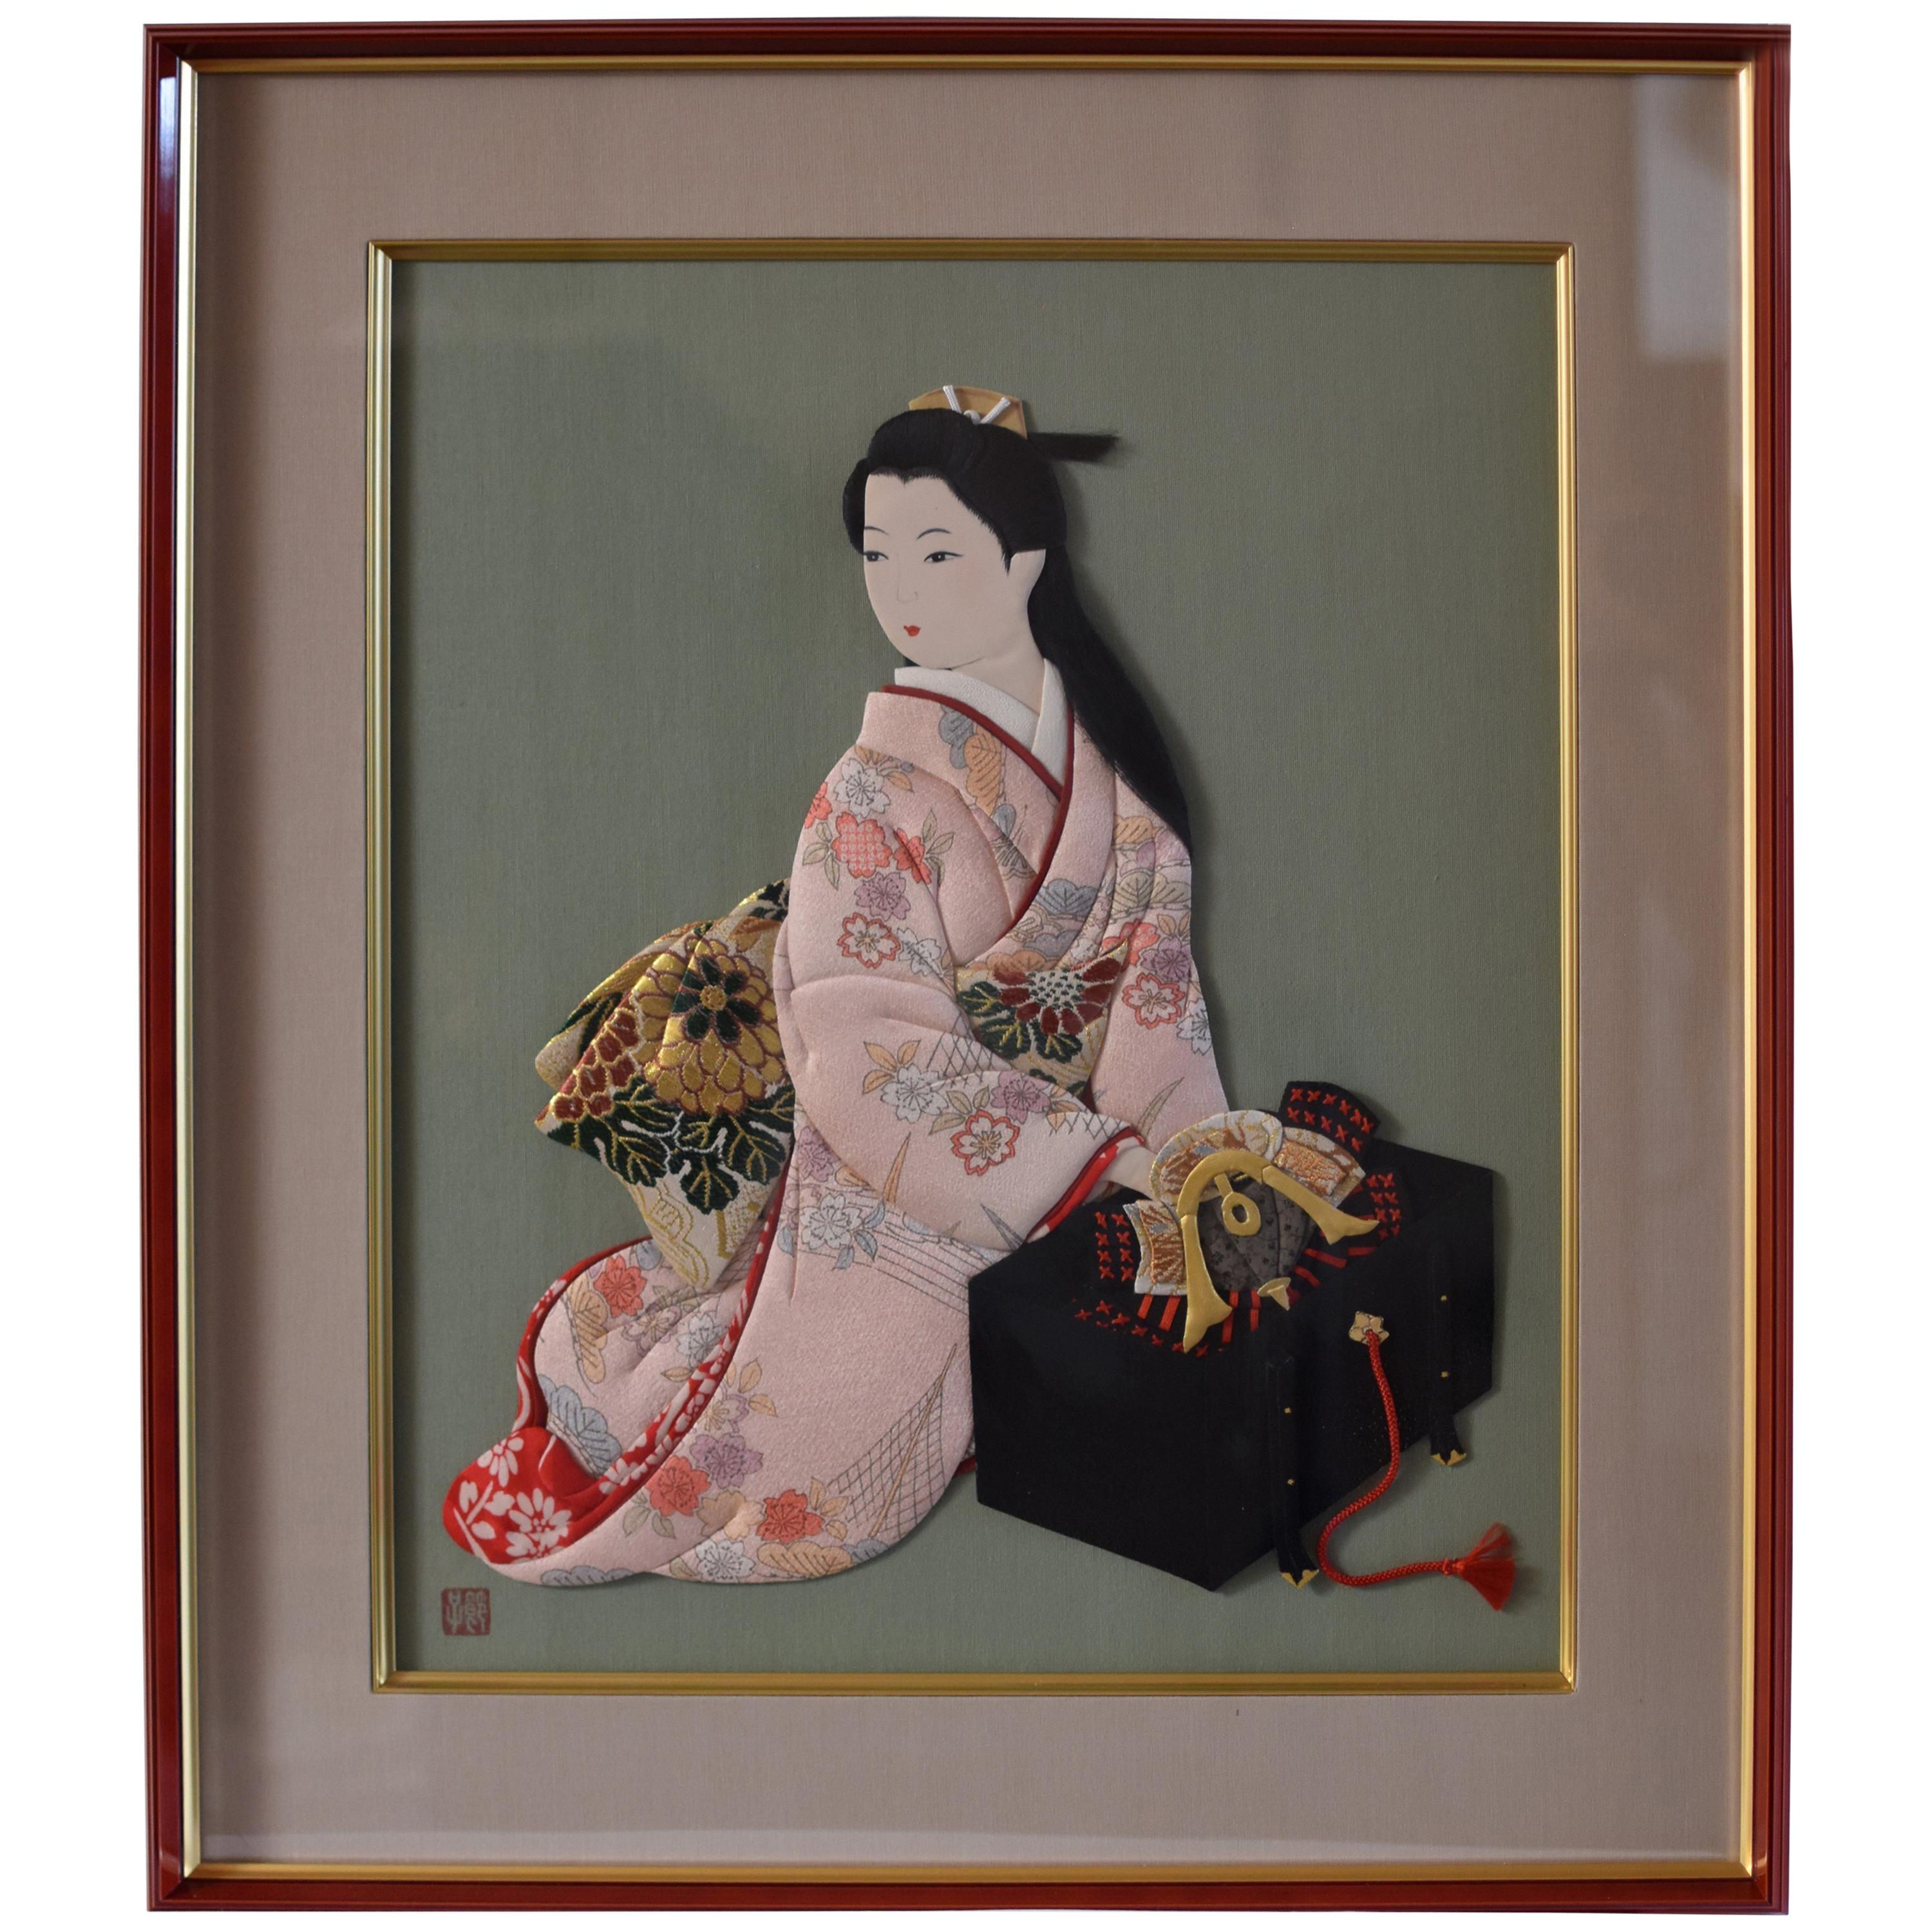 Contemporary Japanese Framed Silk Brocade Handcrafted Oshie Wall Decorative Art